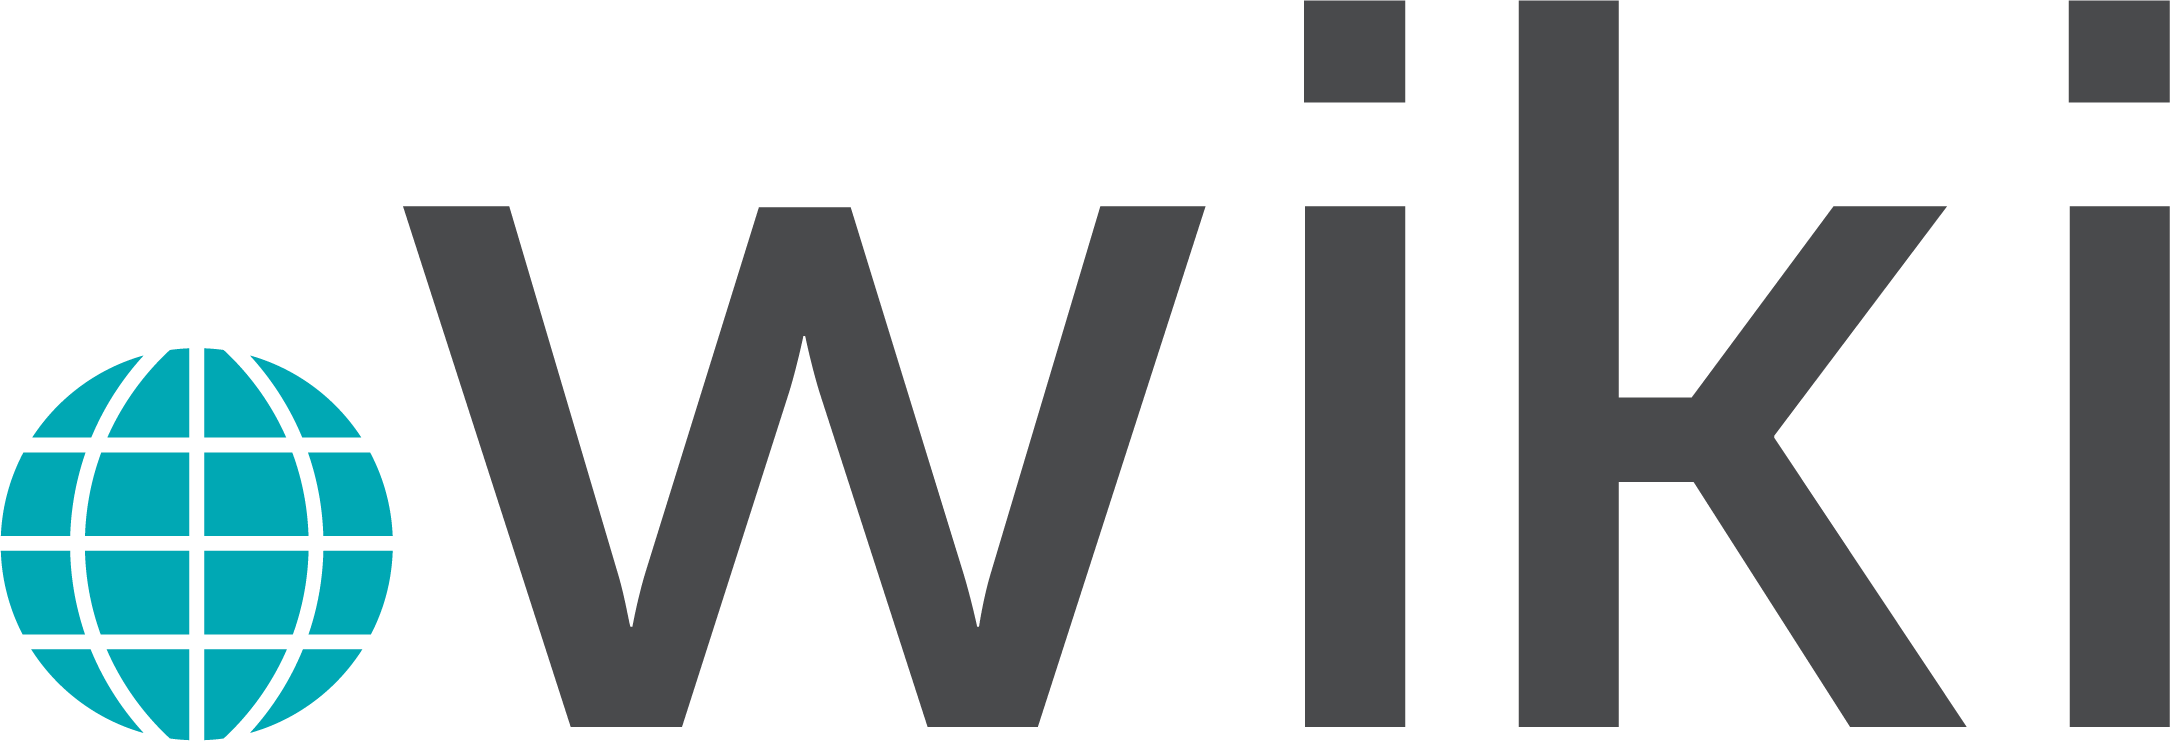 Вик логотип. TECE логотип. Mediawiki logo. Wiki. Домен tv